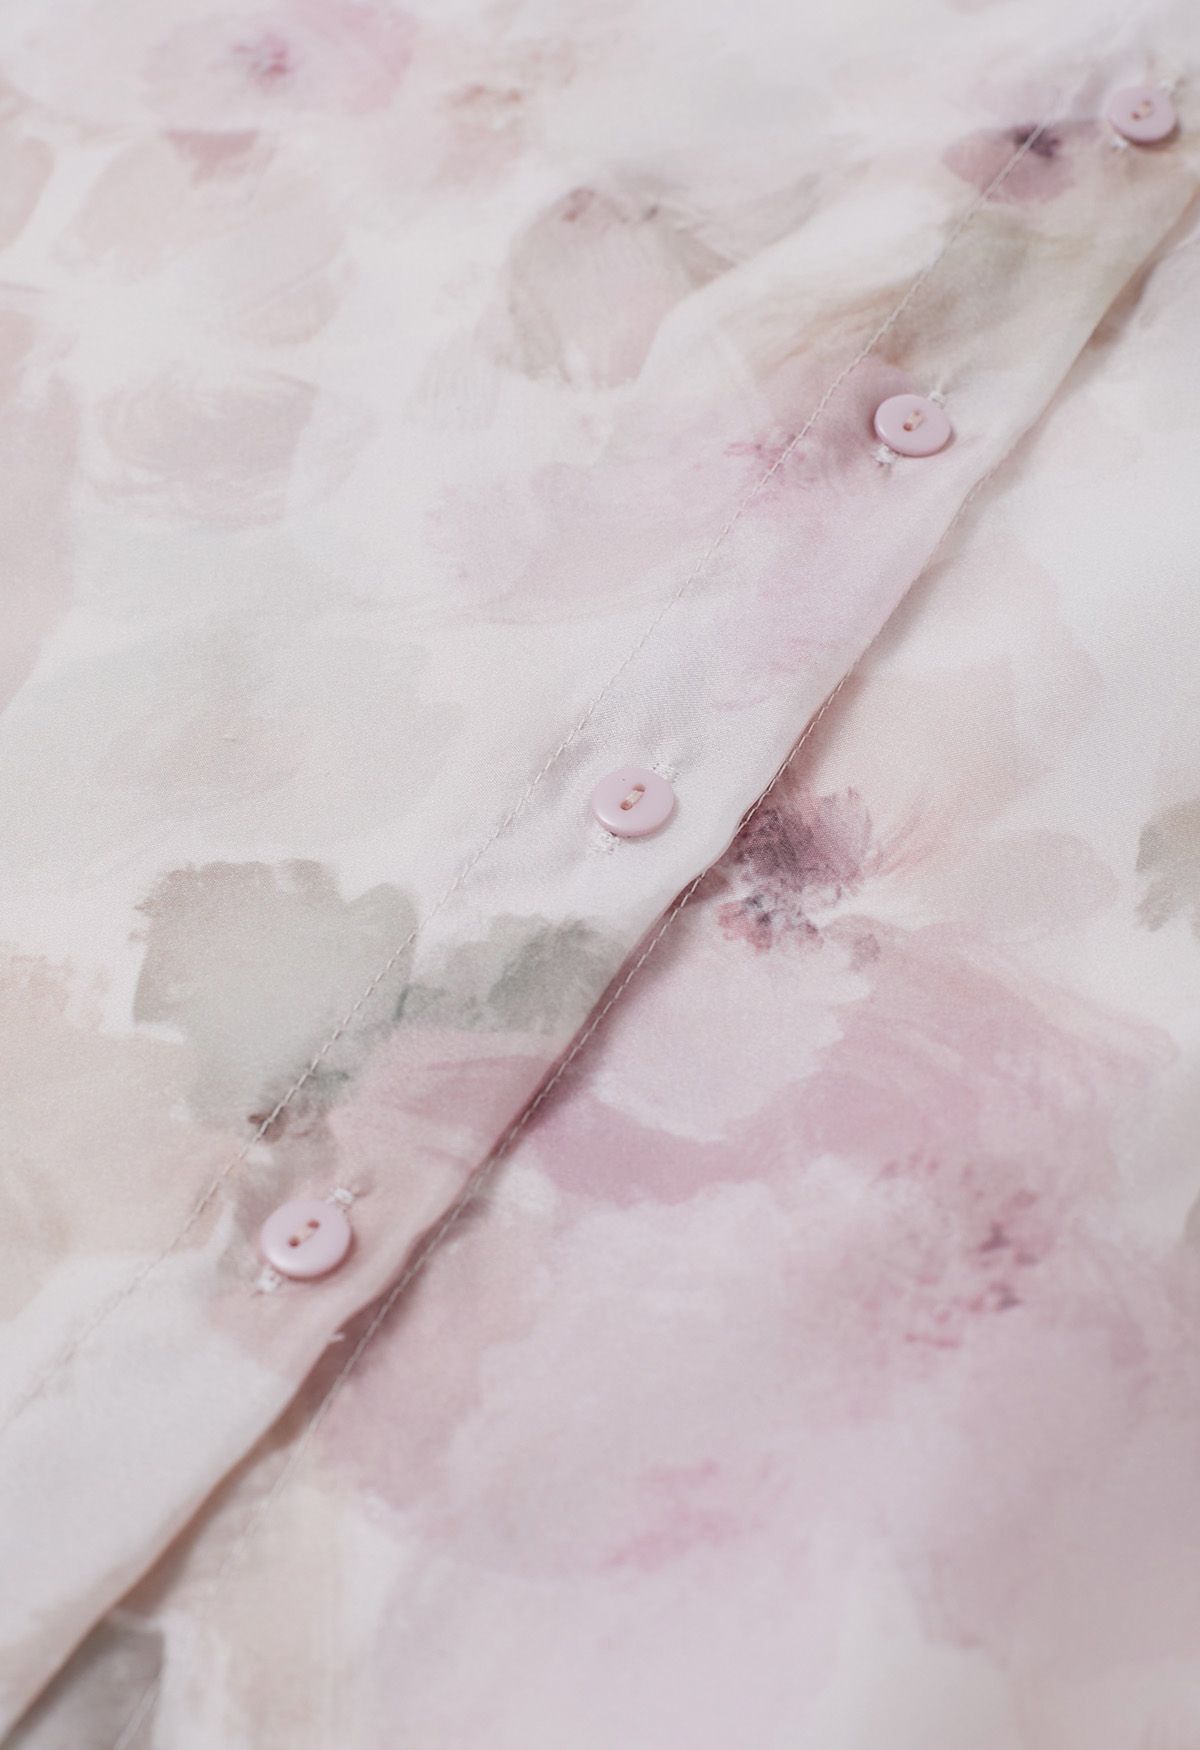 Transparentes Hemd mit Schleife und Aquarellblumenmuster in Rosa